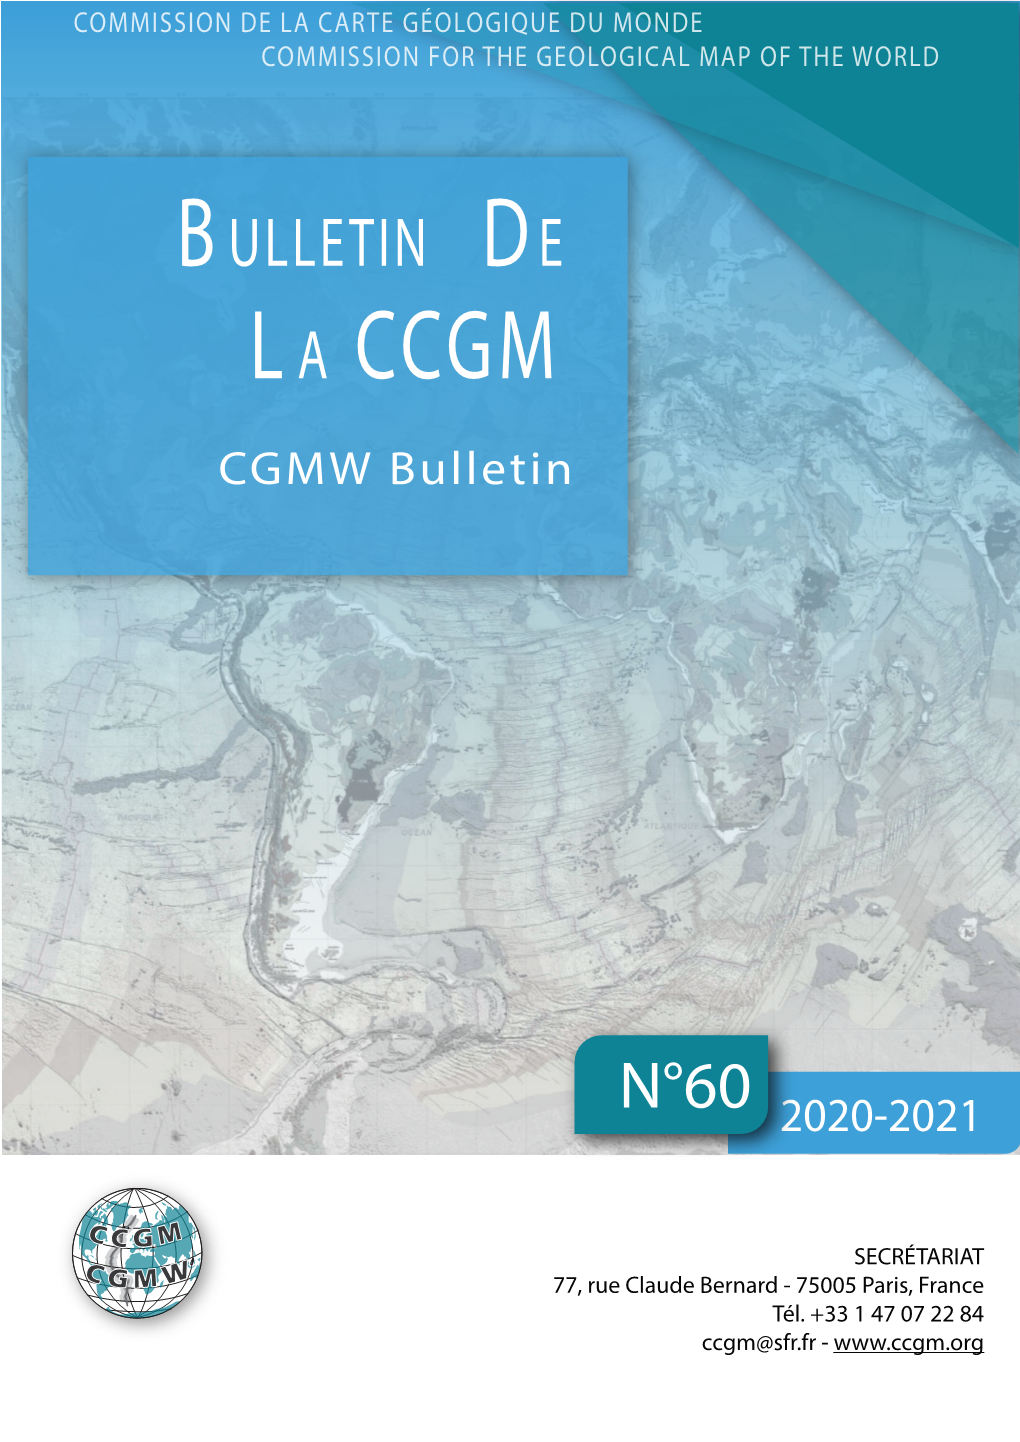 CGMW Bulletin